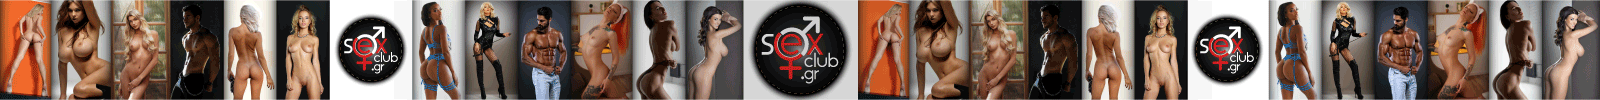 sexclub.gr